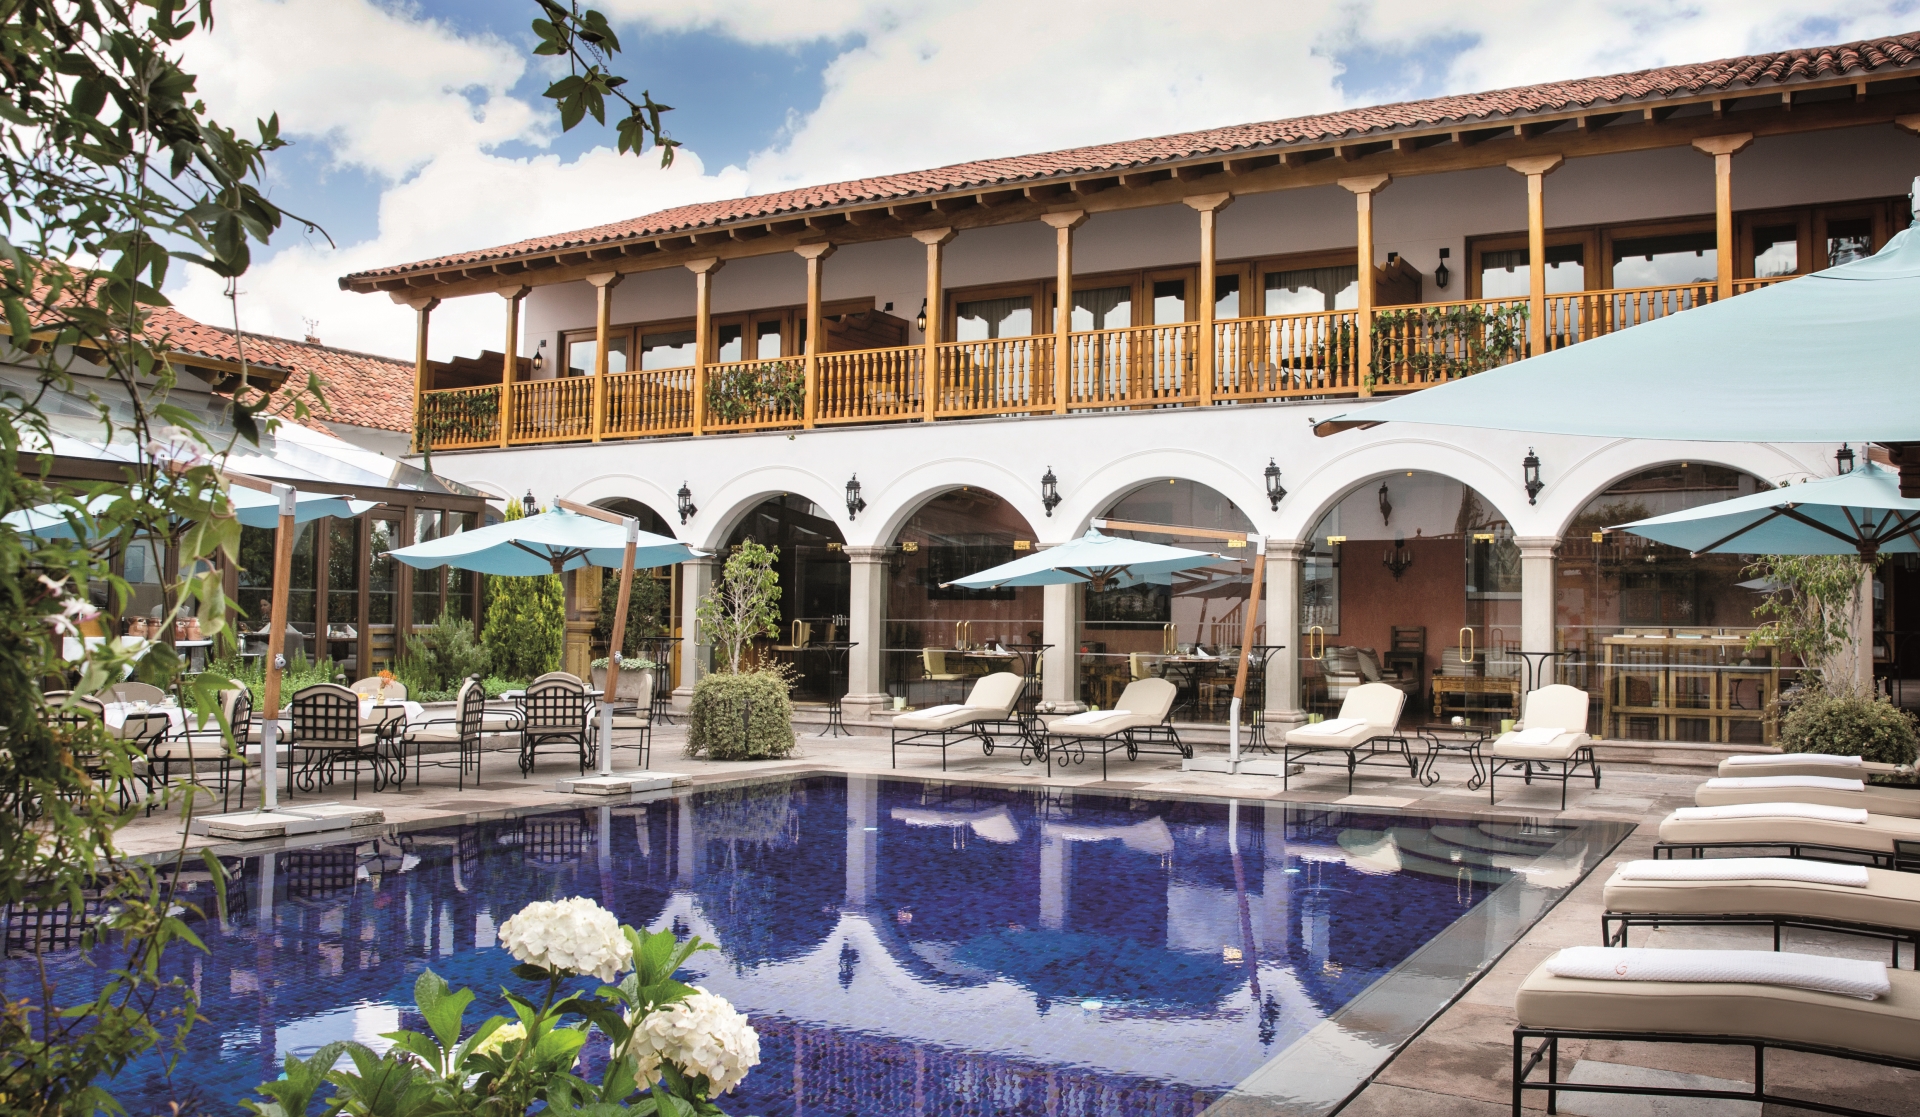 Courtyard pool - Belmond Palacio Nazarenas